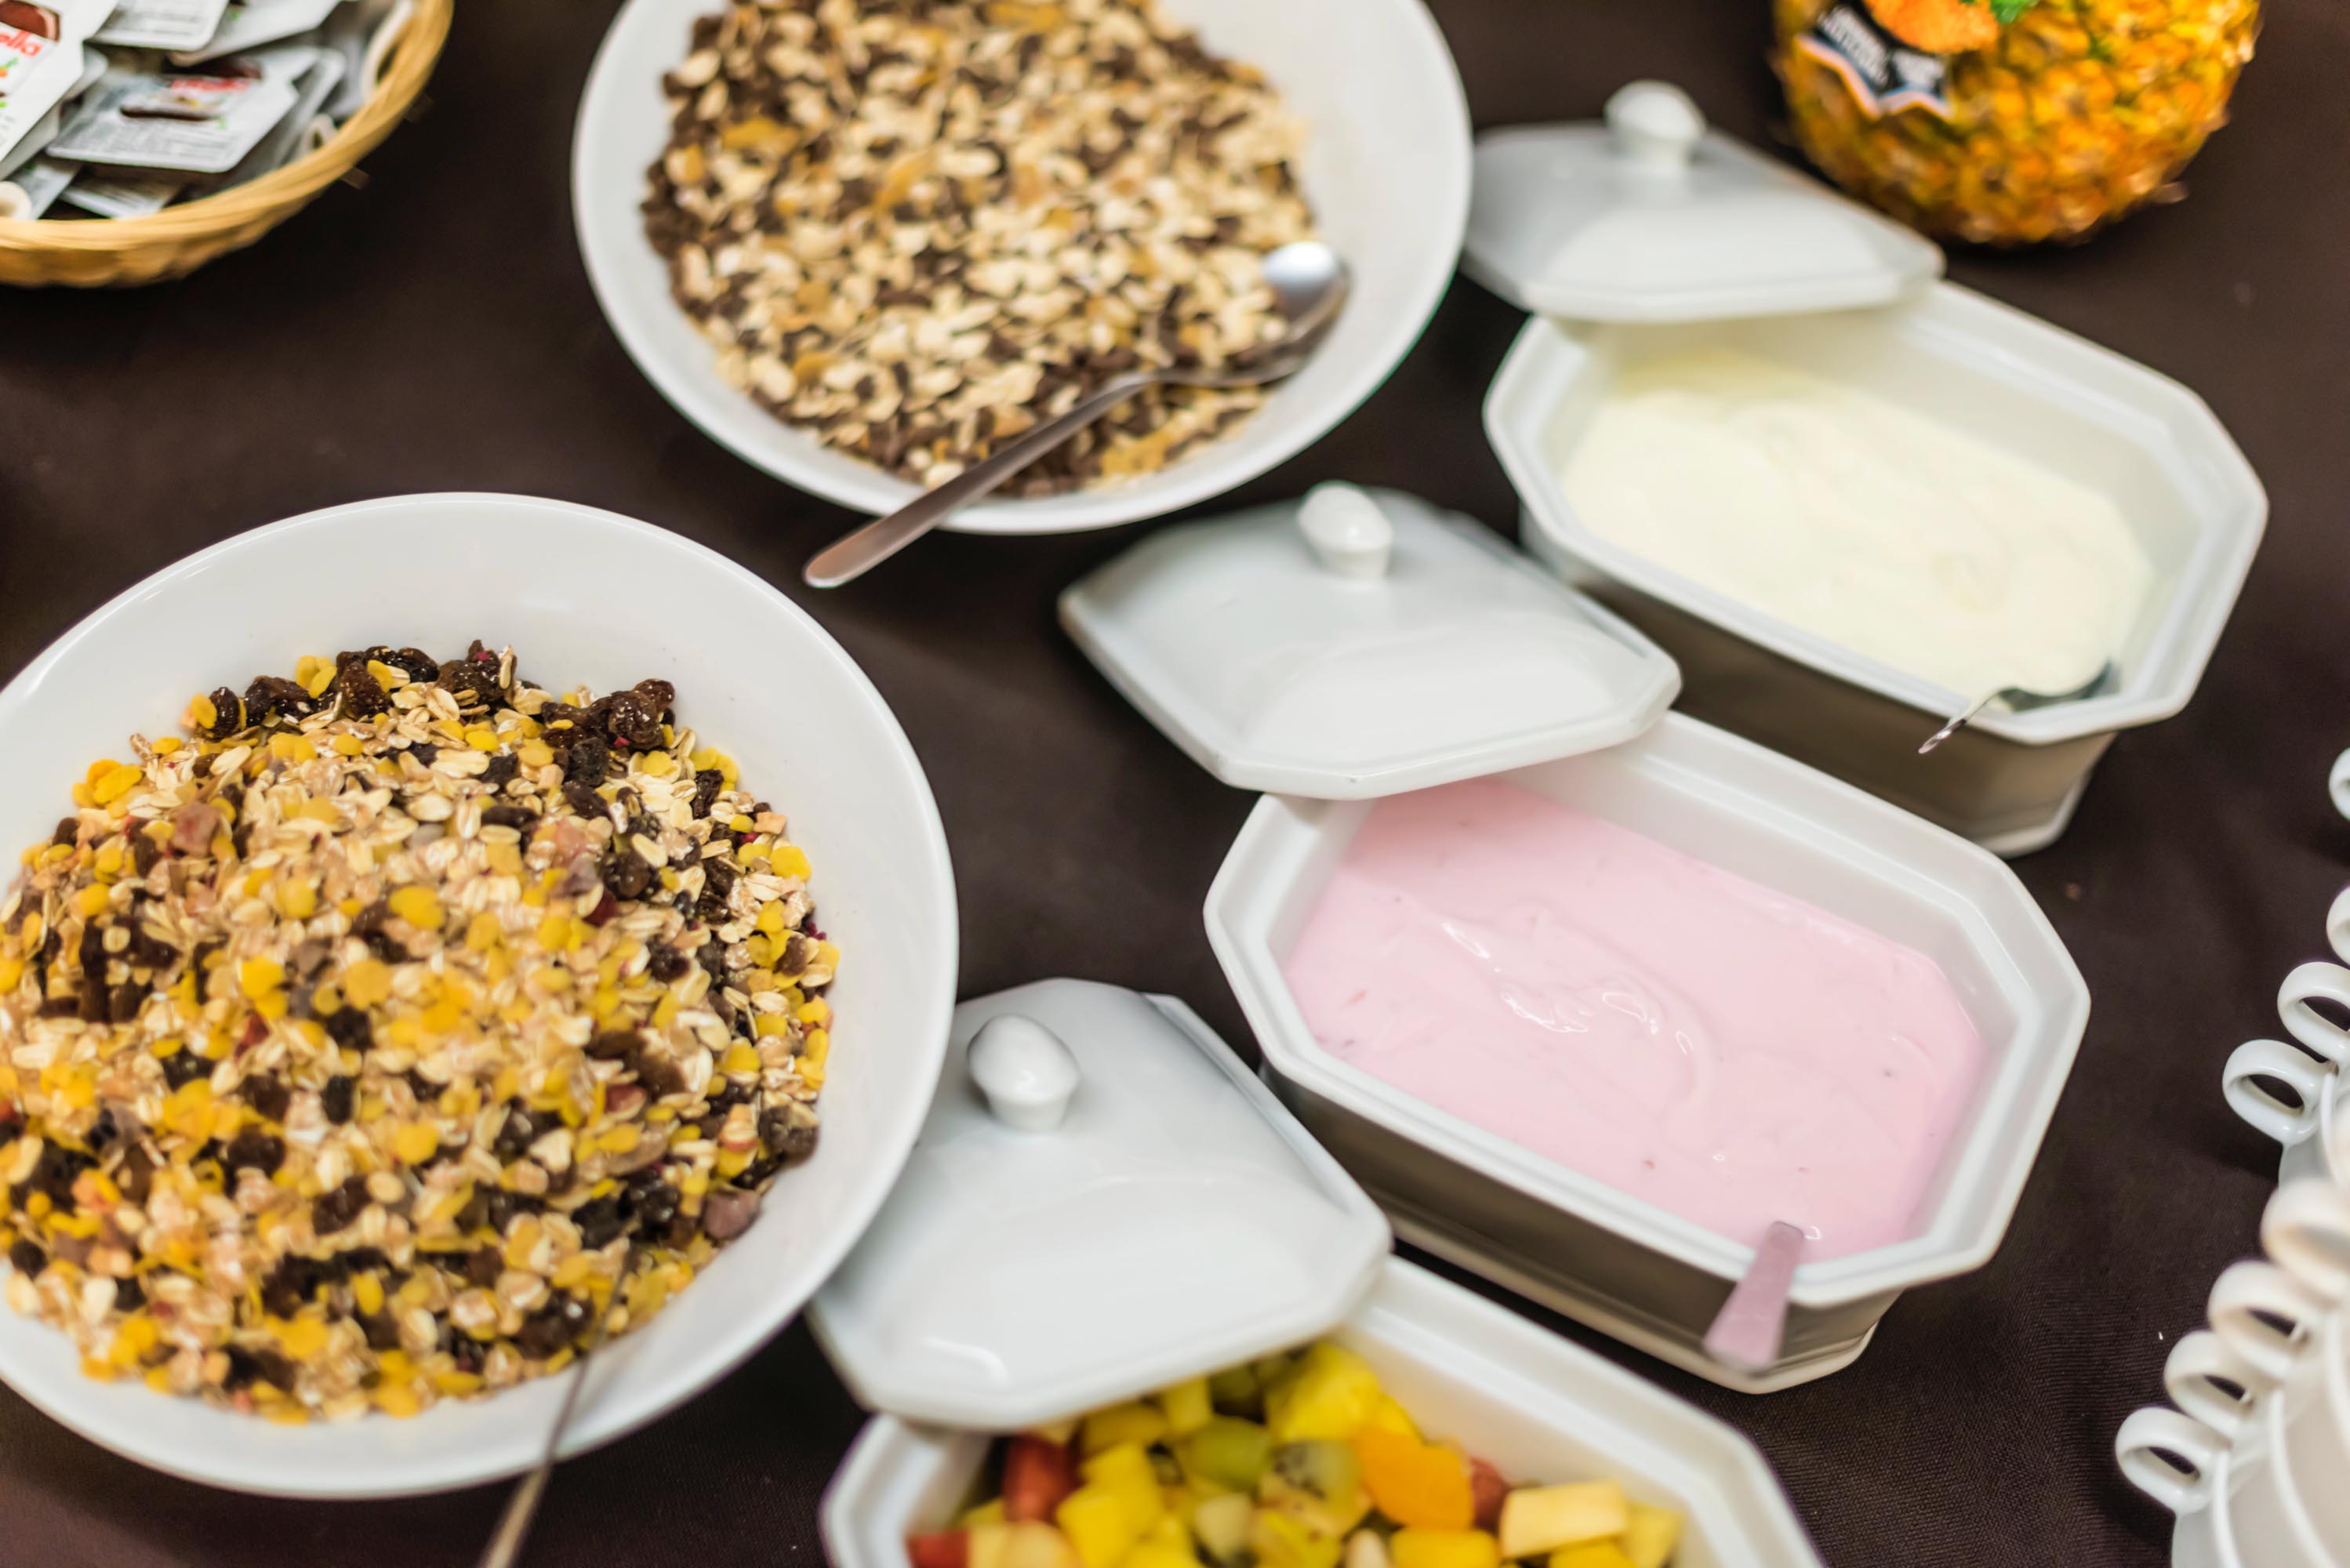 Bowls with yogurt, fruit salad, and granola